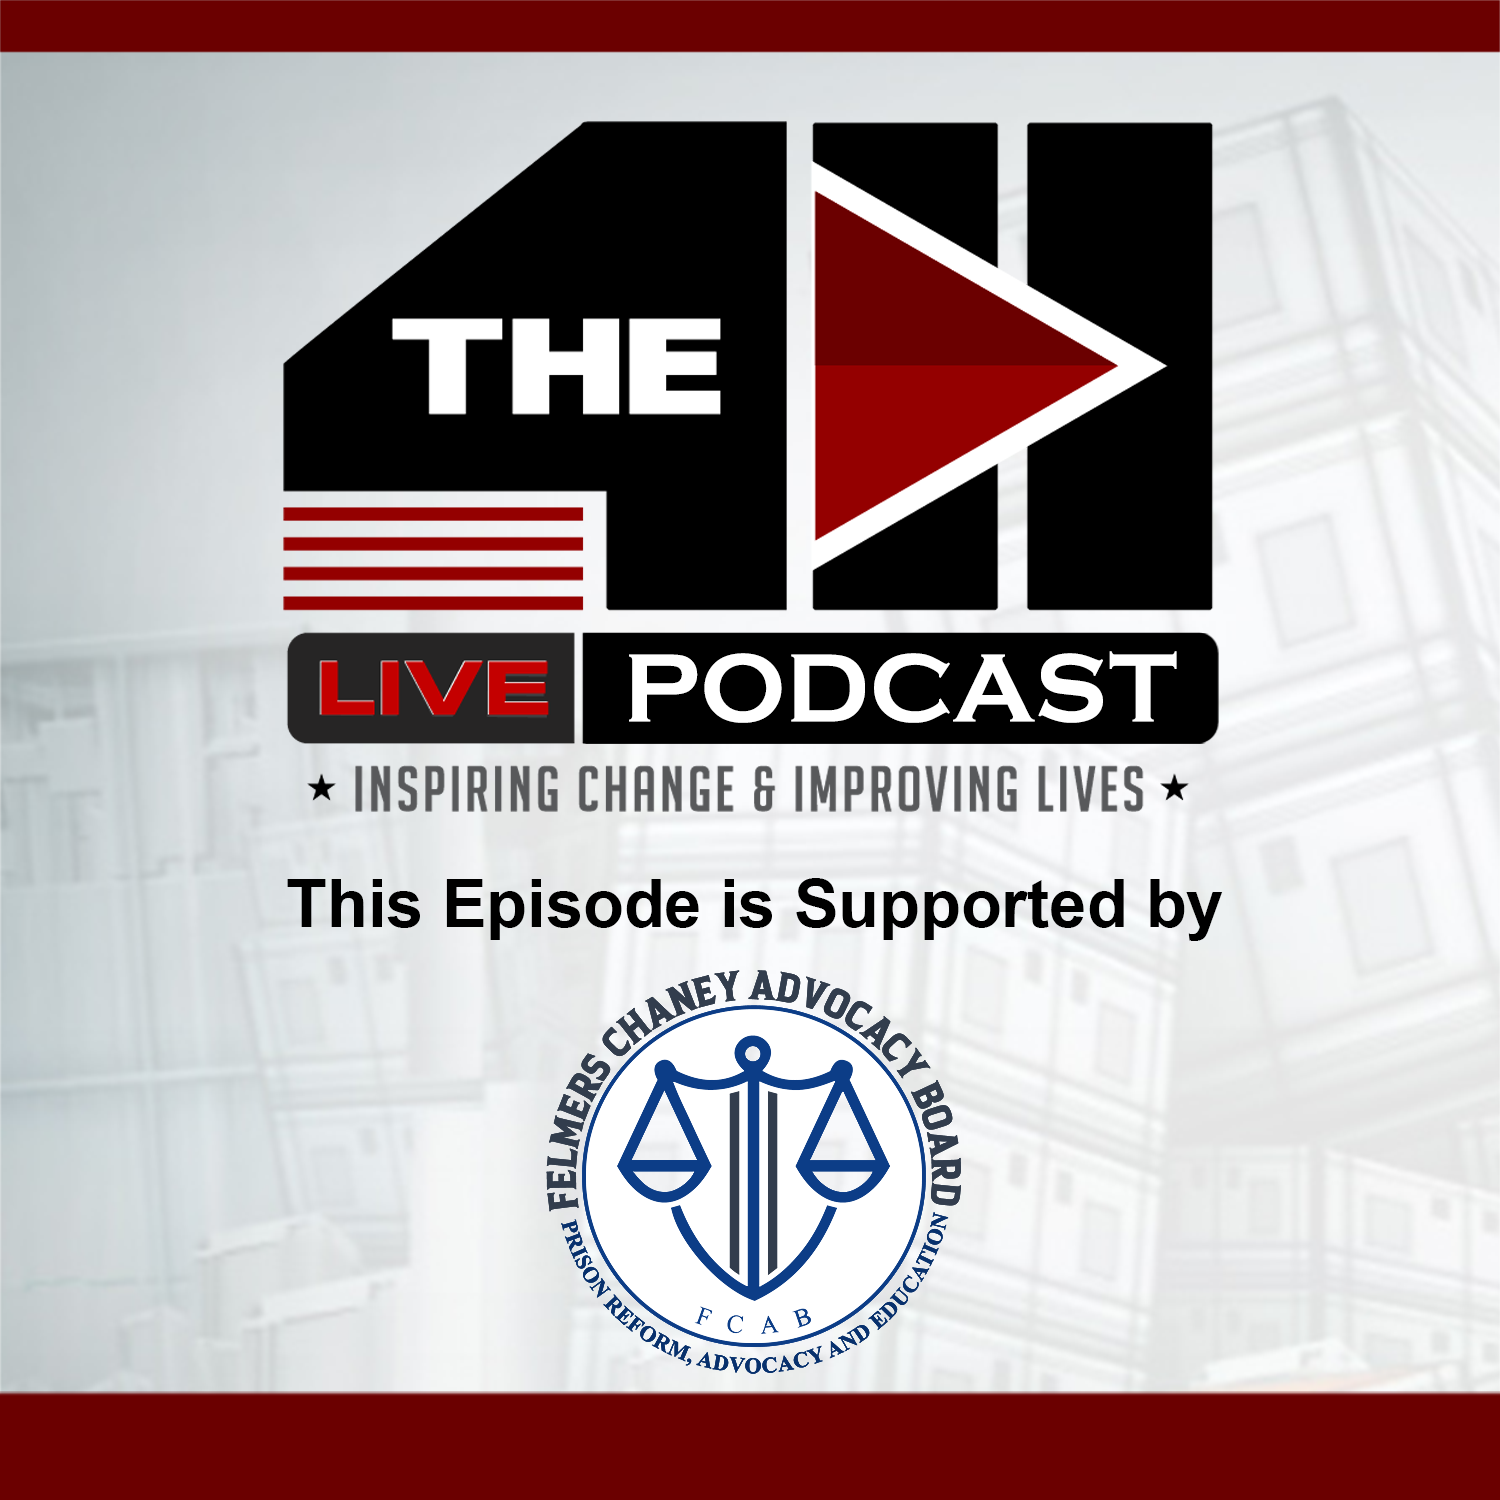 Artwork for podcast The 411 Live